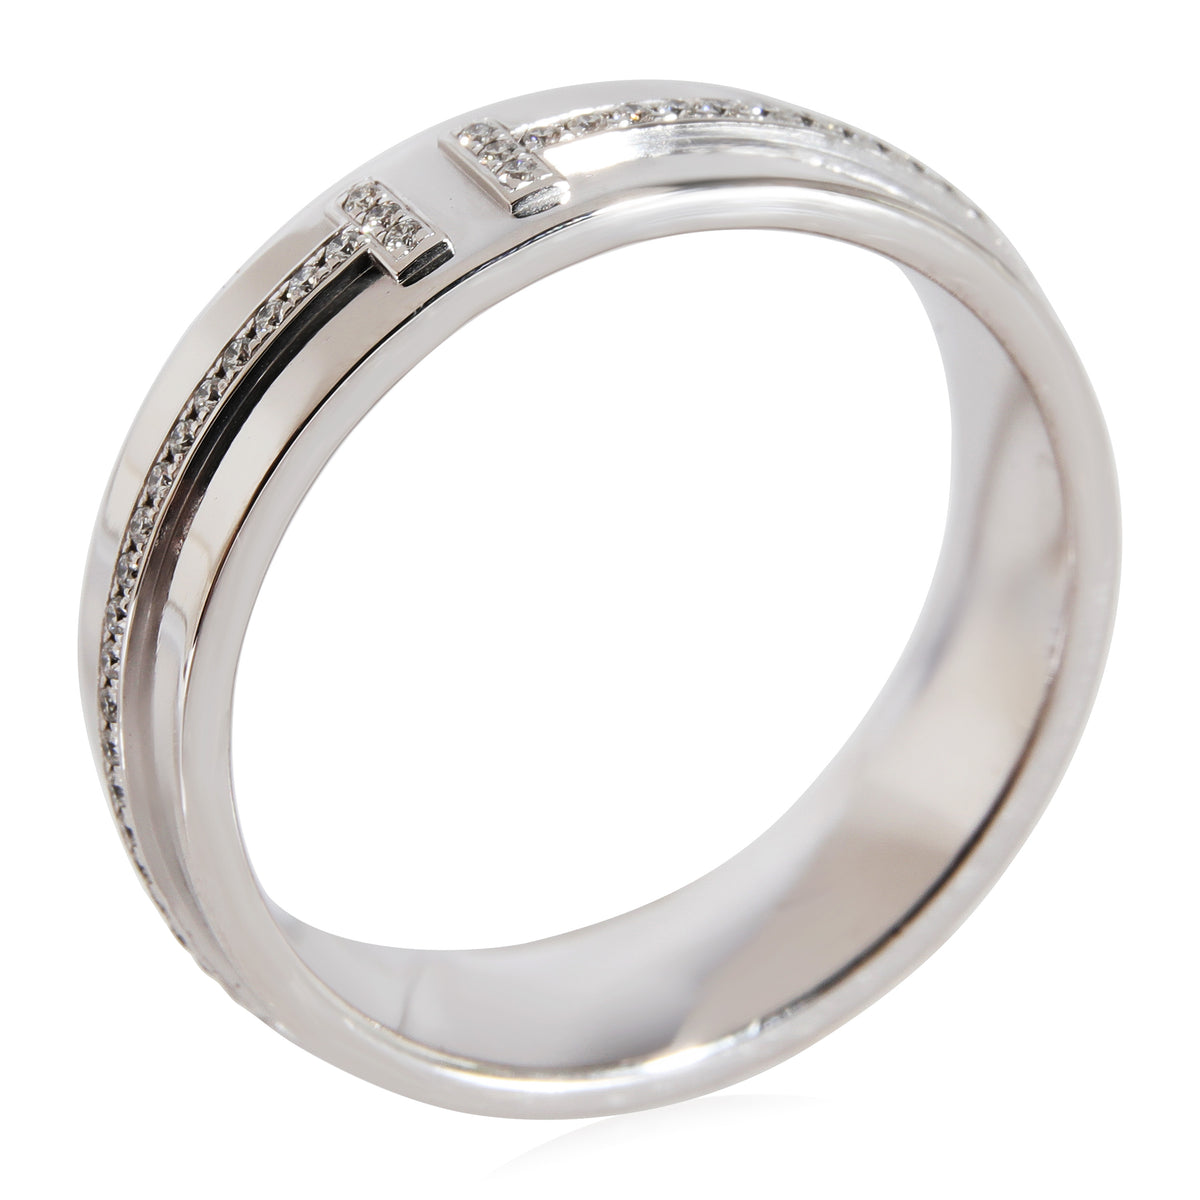 Tiffany & Co. Tiffany T Diamond Ring in 18k White Gold 0.13 Ctw